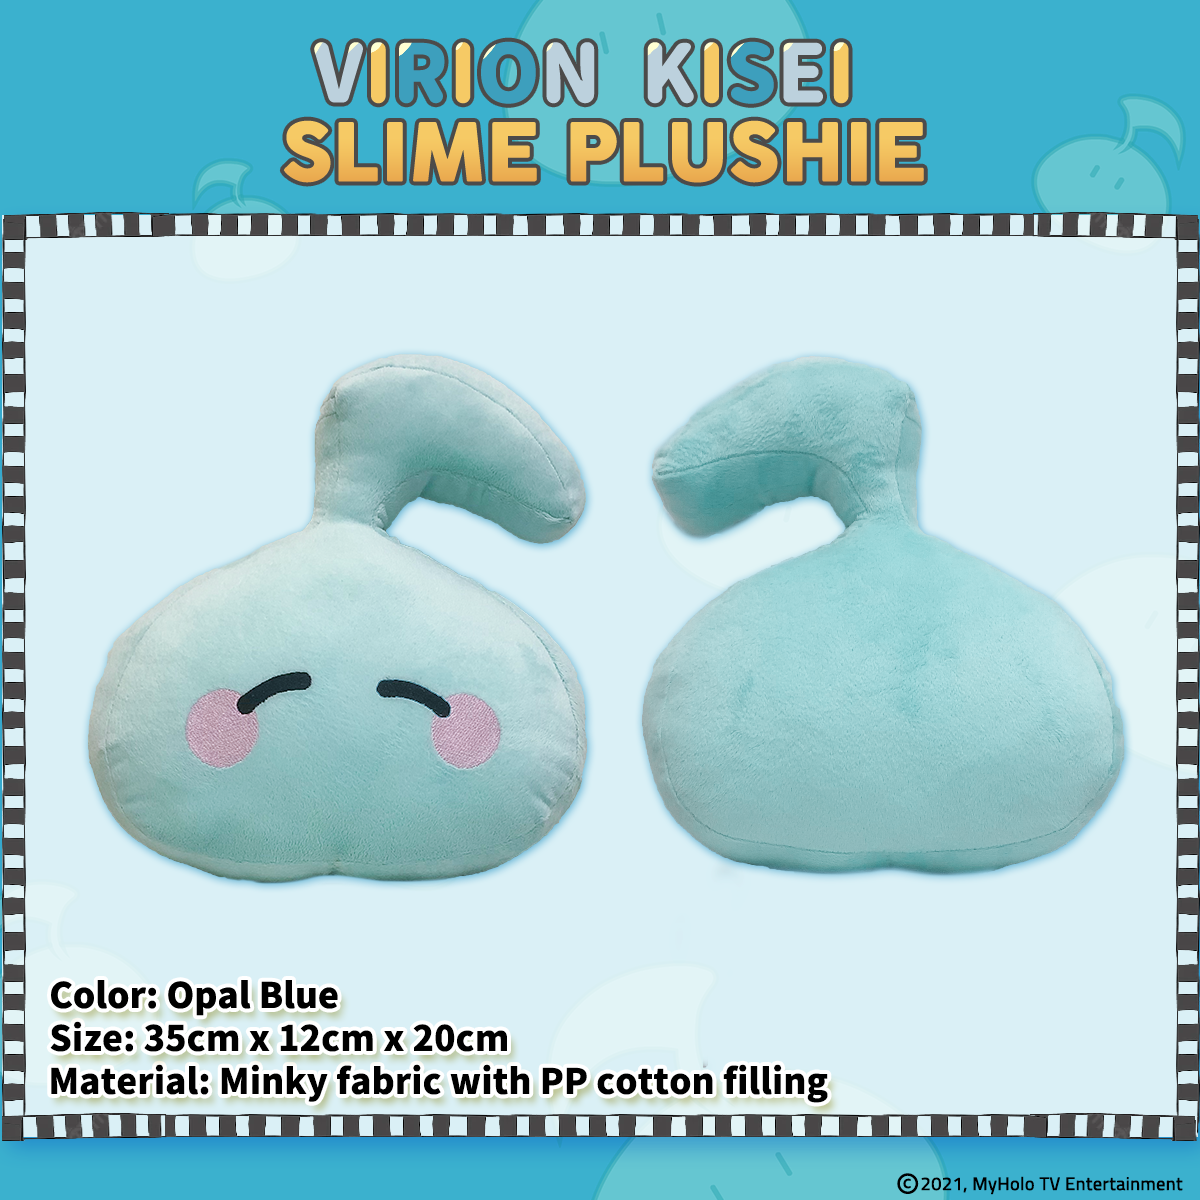 Virion Kisei Slime Plushie (Opal Blue) - Limited Edition